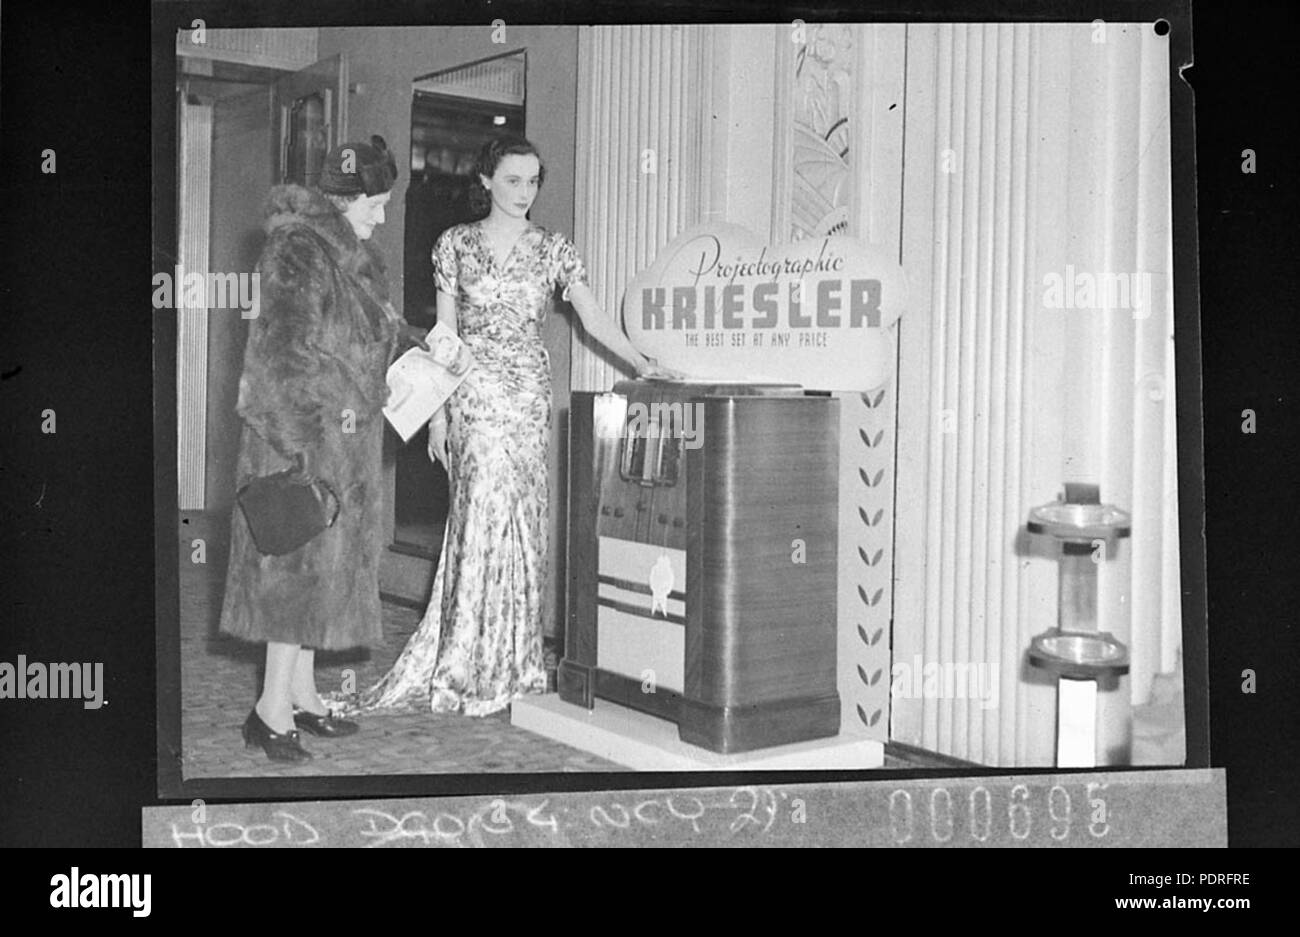 133 SLNSW 11656 Kriesler radio display at Embassy Theatre for Radio Retailer Usherette demonstrates Projectographic Kriesler radio Stock Photo